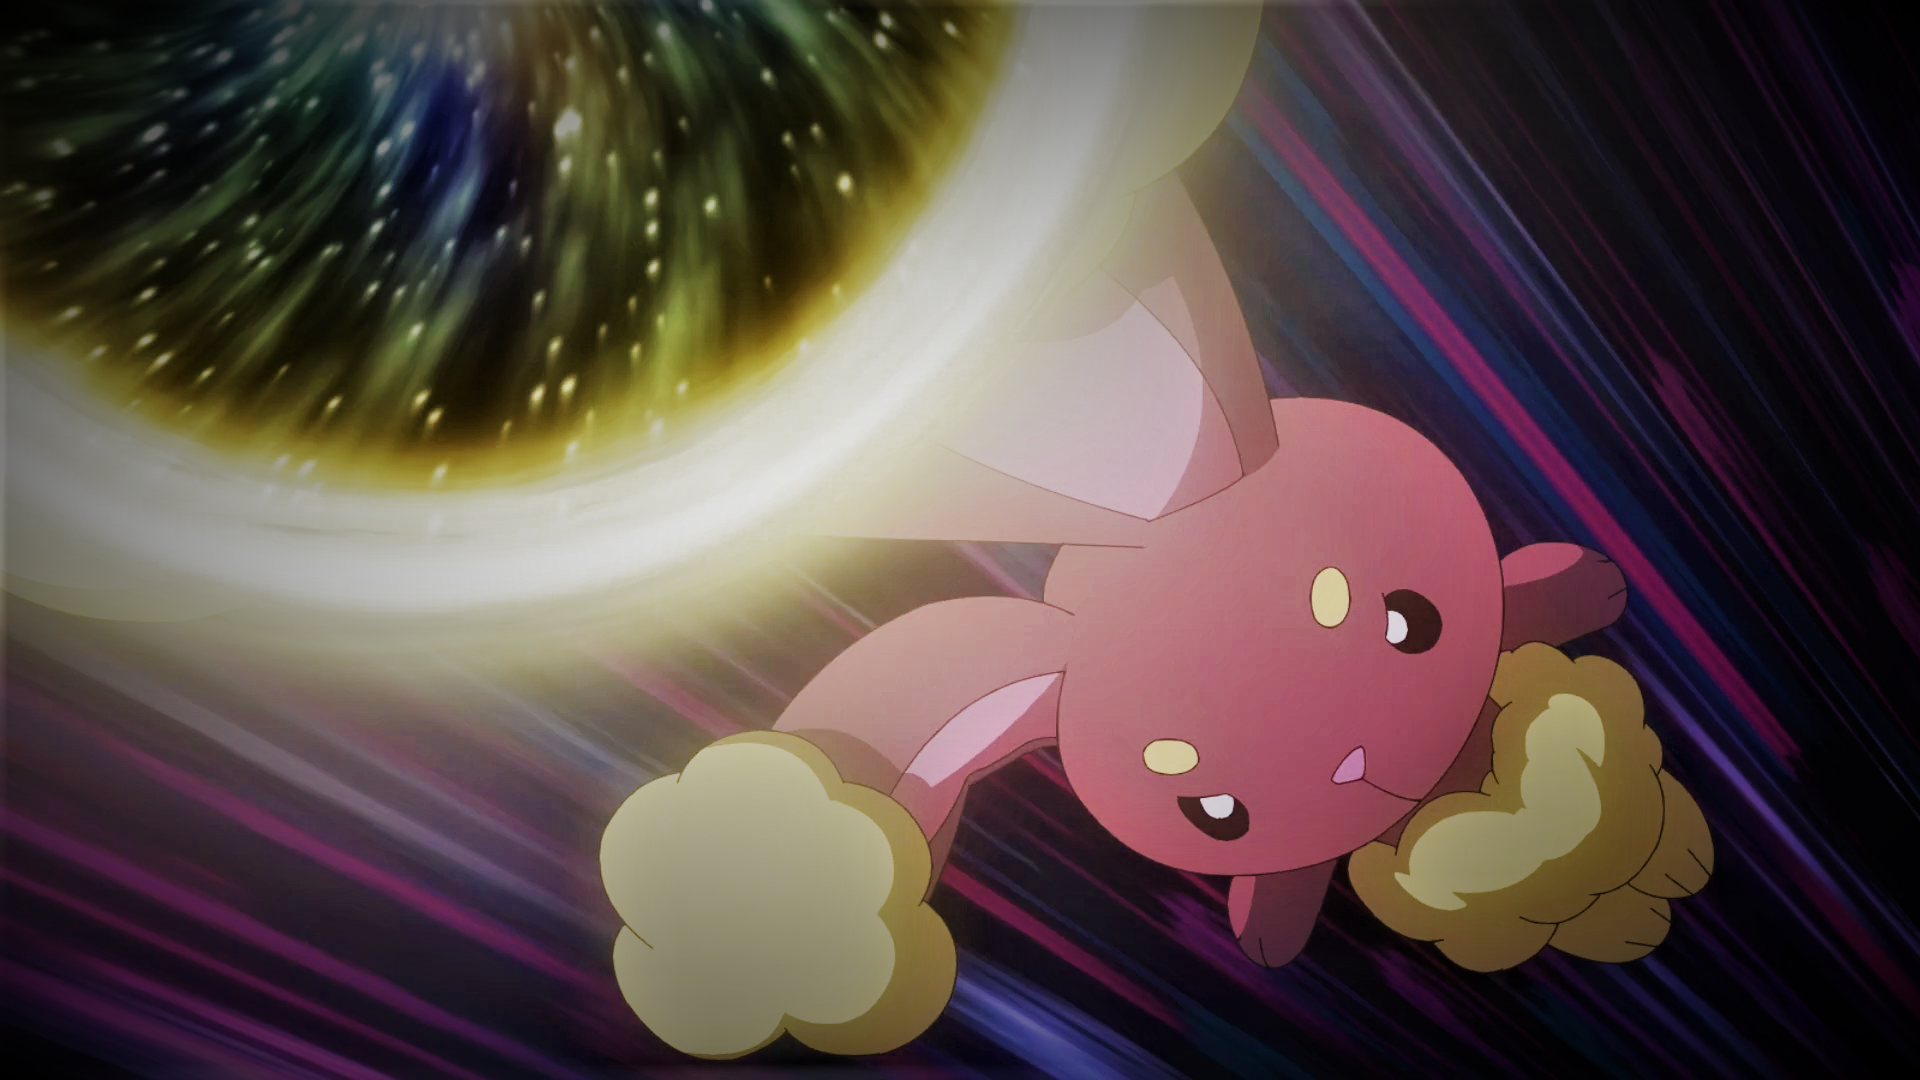 The evolution of Mega punch 👊👊👊👊in the Pokémon anime 